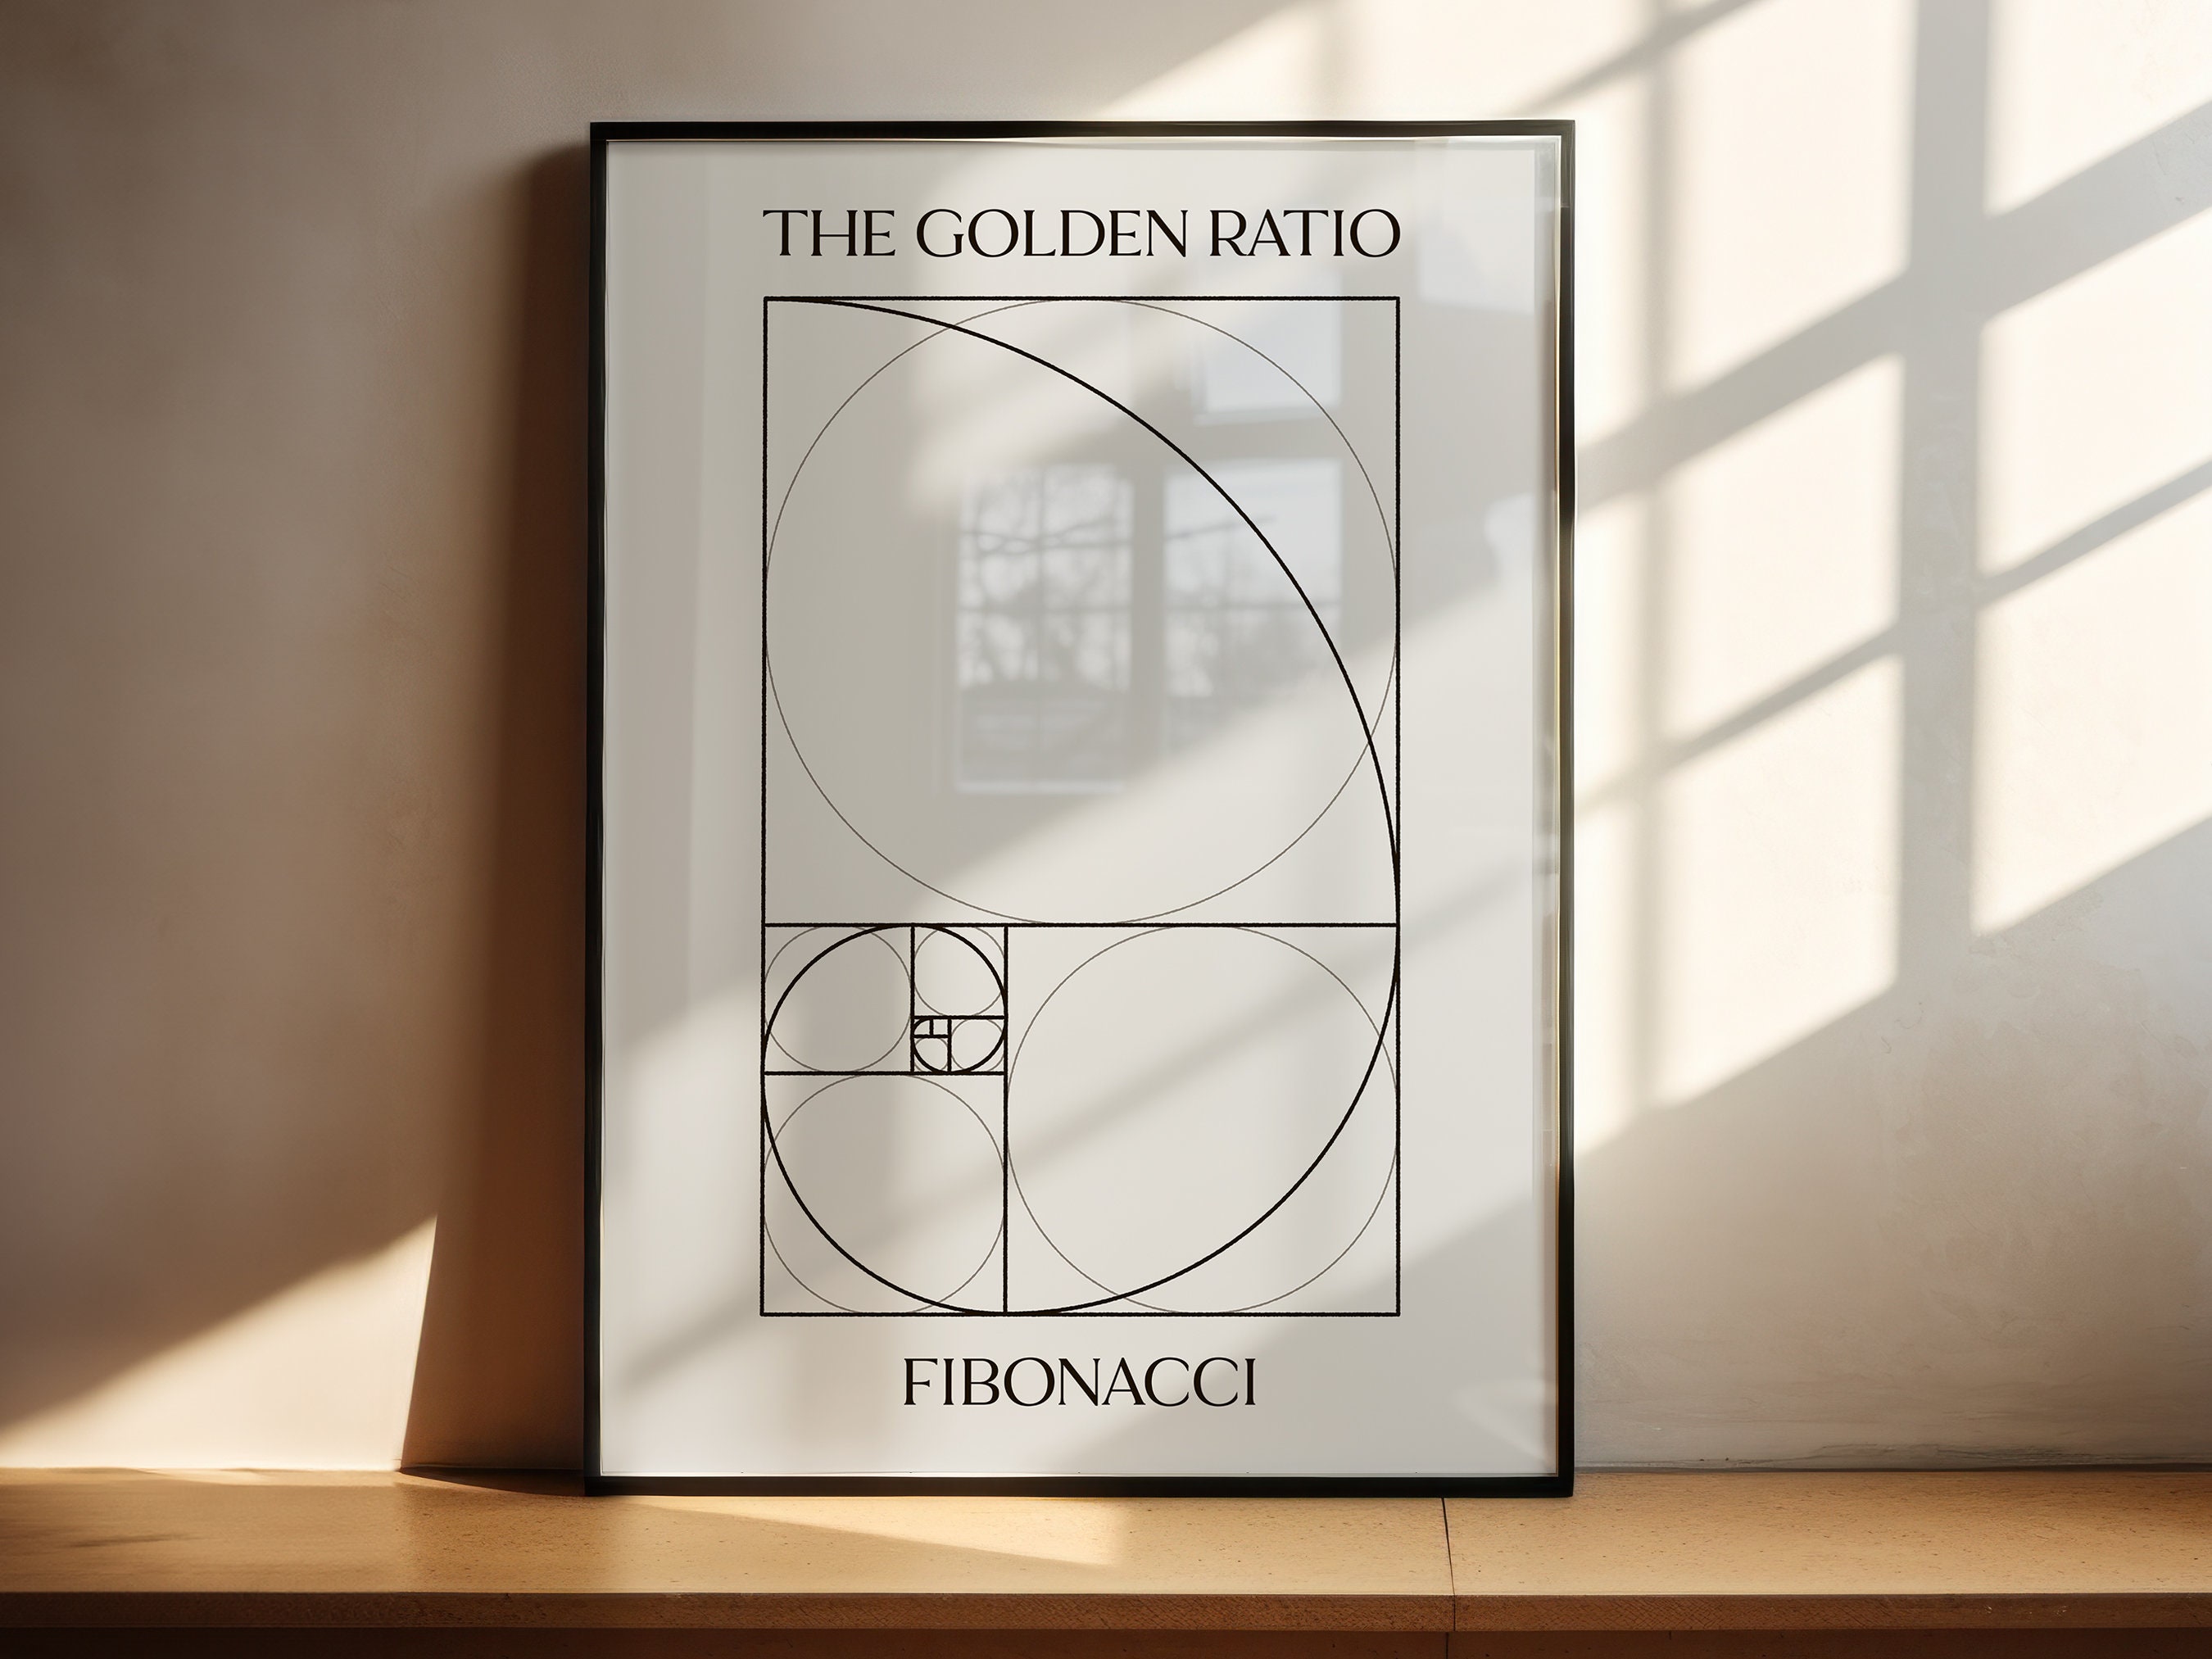 Golden ratio poster -  France